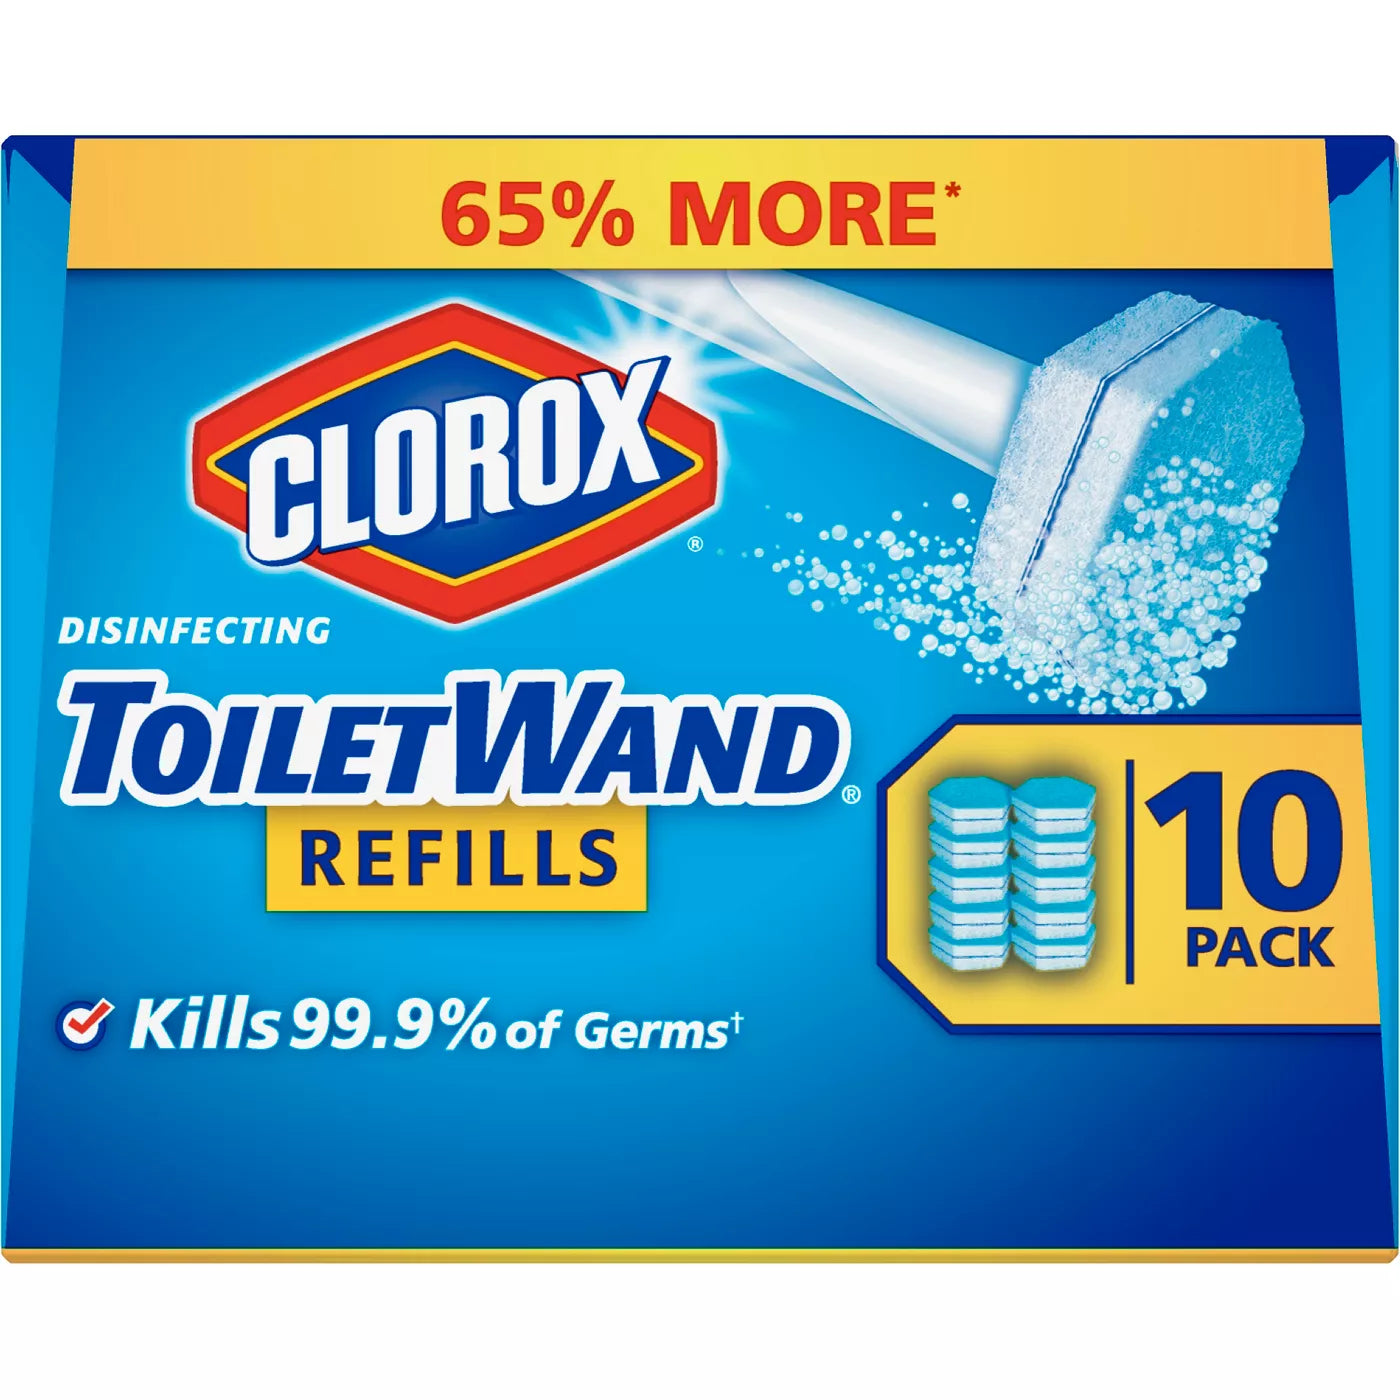 Clorox Toilet Wand Head Refills – Pack of 10